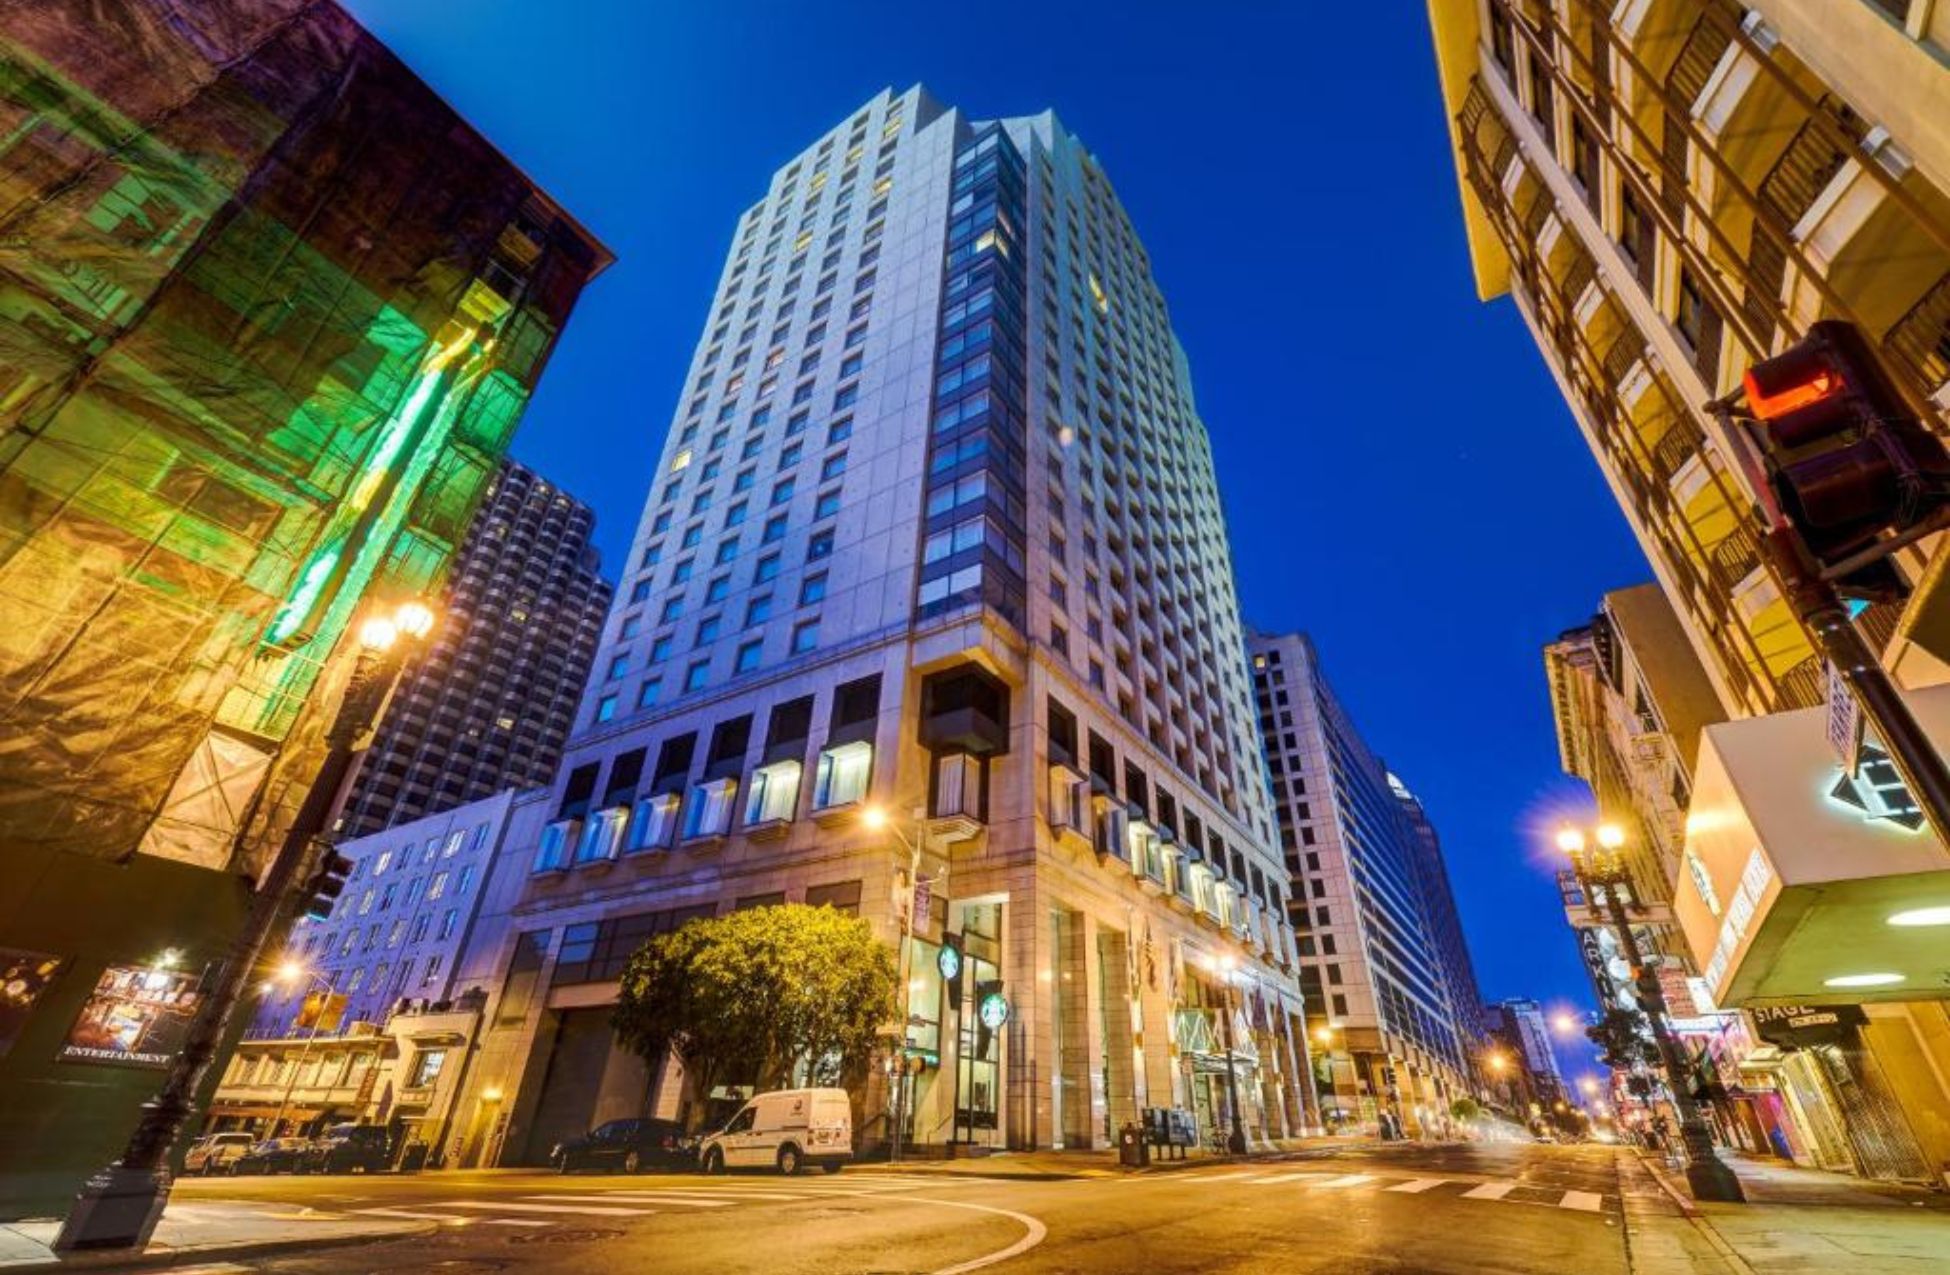 Hotel Nikko San Francisco - Best Hotels In San Francisco